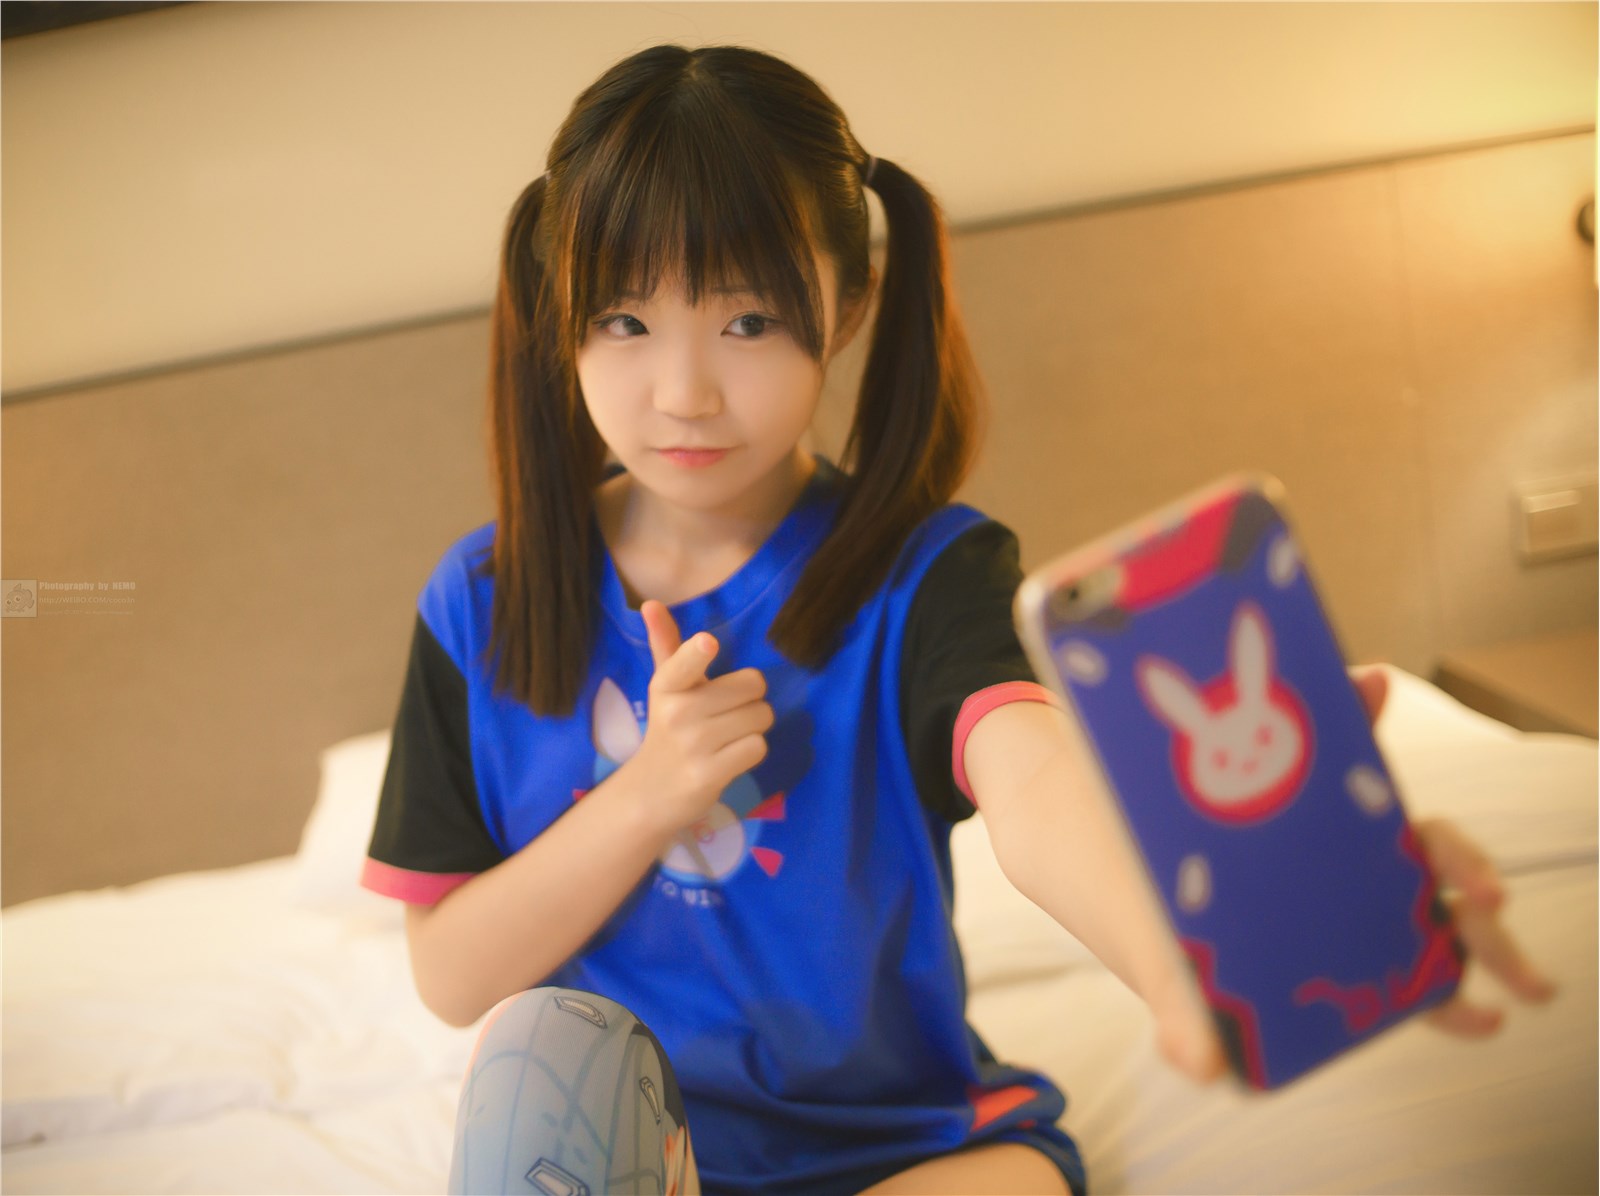 Yumiko gymnastic outfit(17)